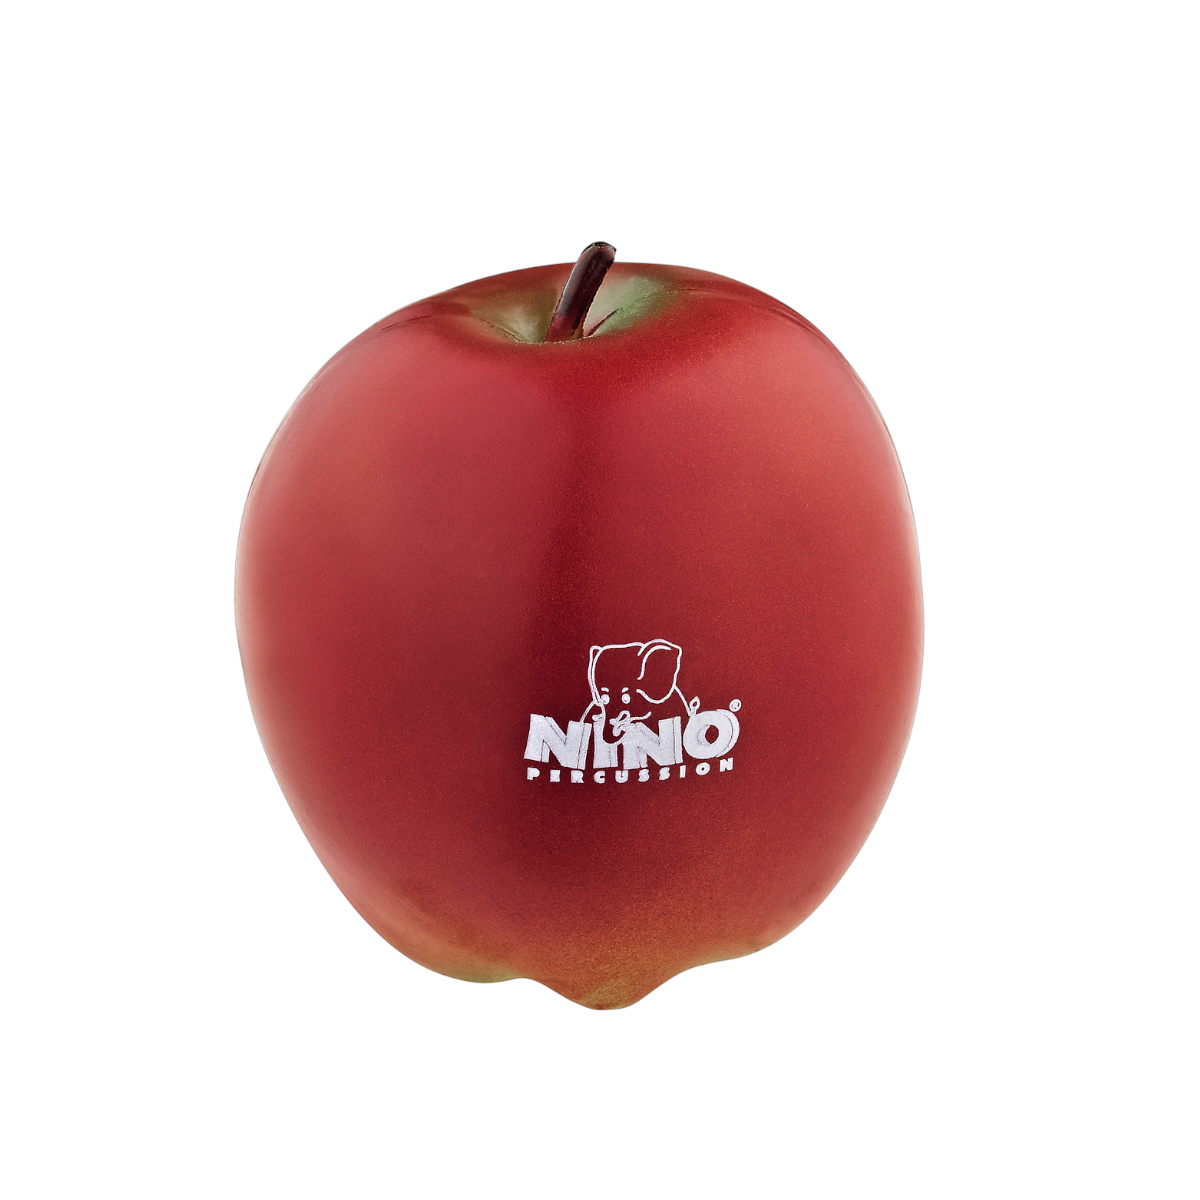 Nino Percussion Fruit & Vegetable Shaker - Apple